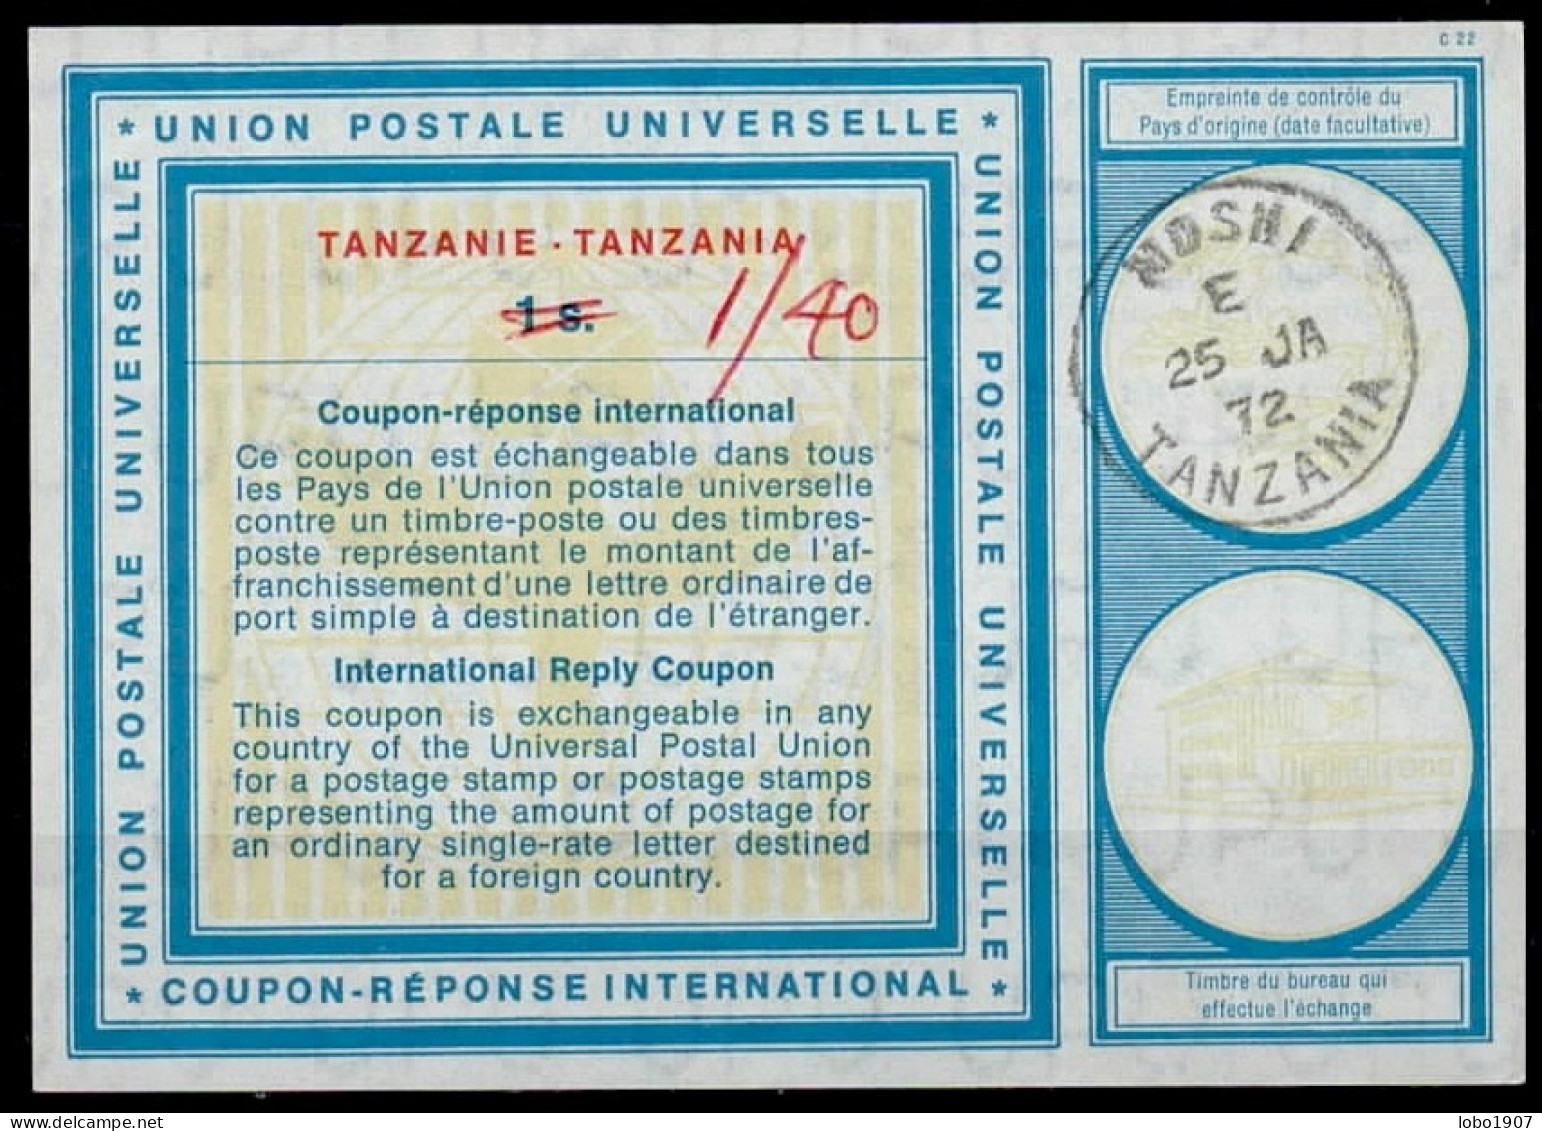 TANZANIE TANZANIA  Vi19  1/40 On 1s.  International Reply Coupon Reponse Antwortschein IRC IAS  MOSCHI 25.01.72 - Tanzania (1964-...)